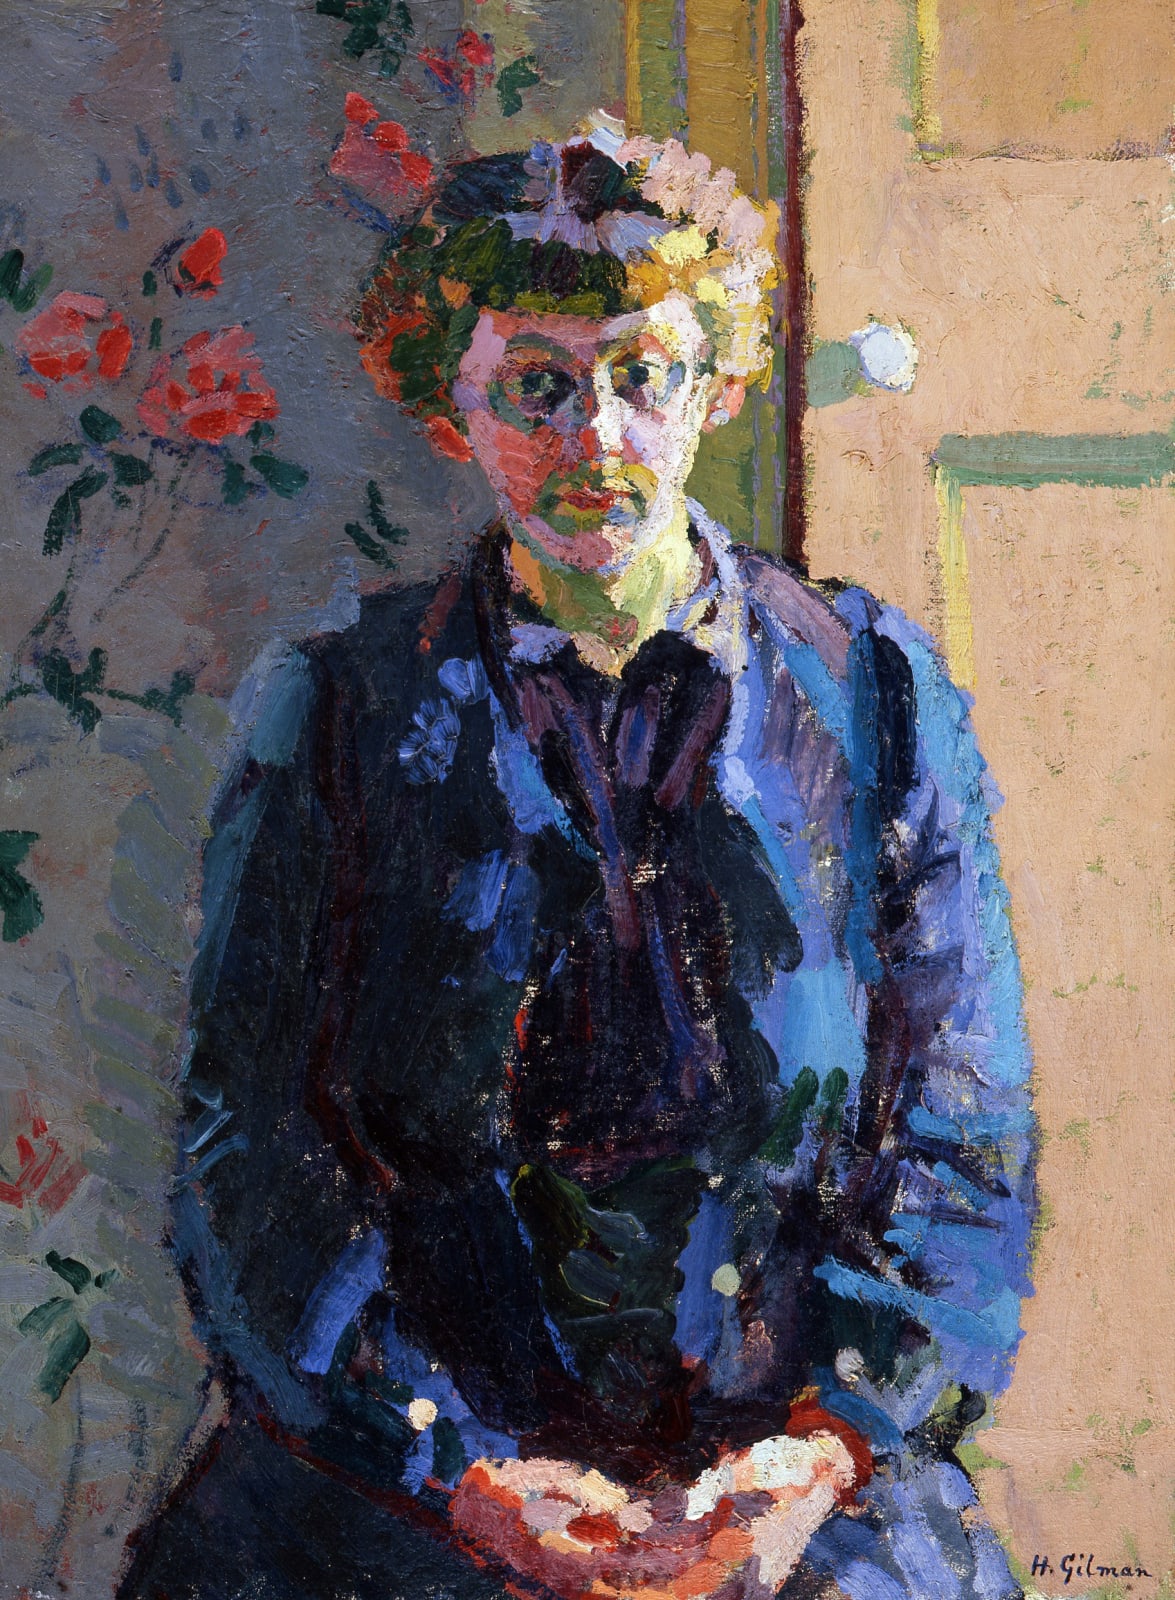 Harold Gilman (1876-1919) Portrait of Sylvia Gosse 1912‒13 Oil on canvas 67 x 49 cm Southampton City Art Gallery